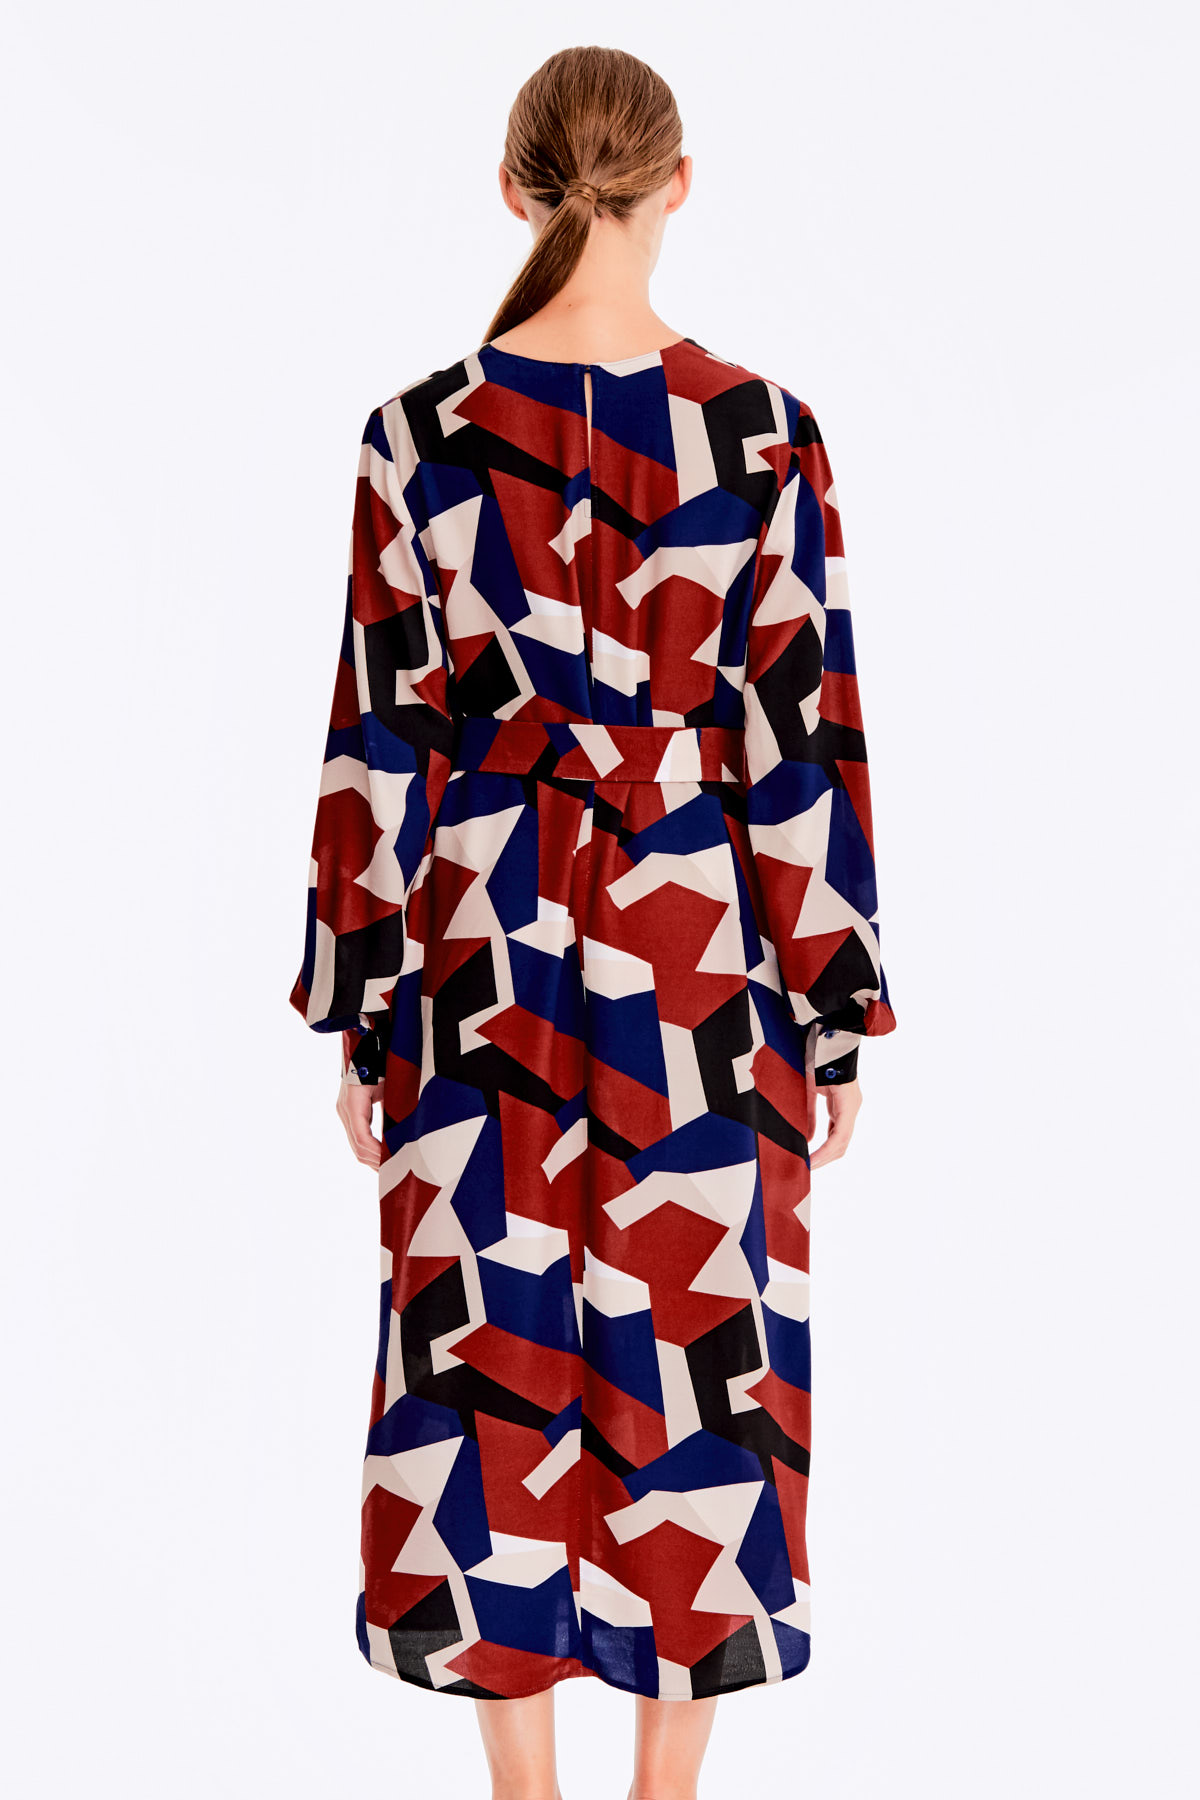 Free midi dress with variegated geometric print ¶¶, photo 7